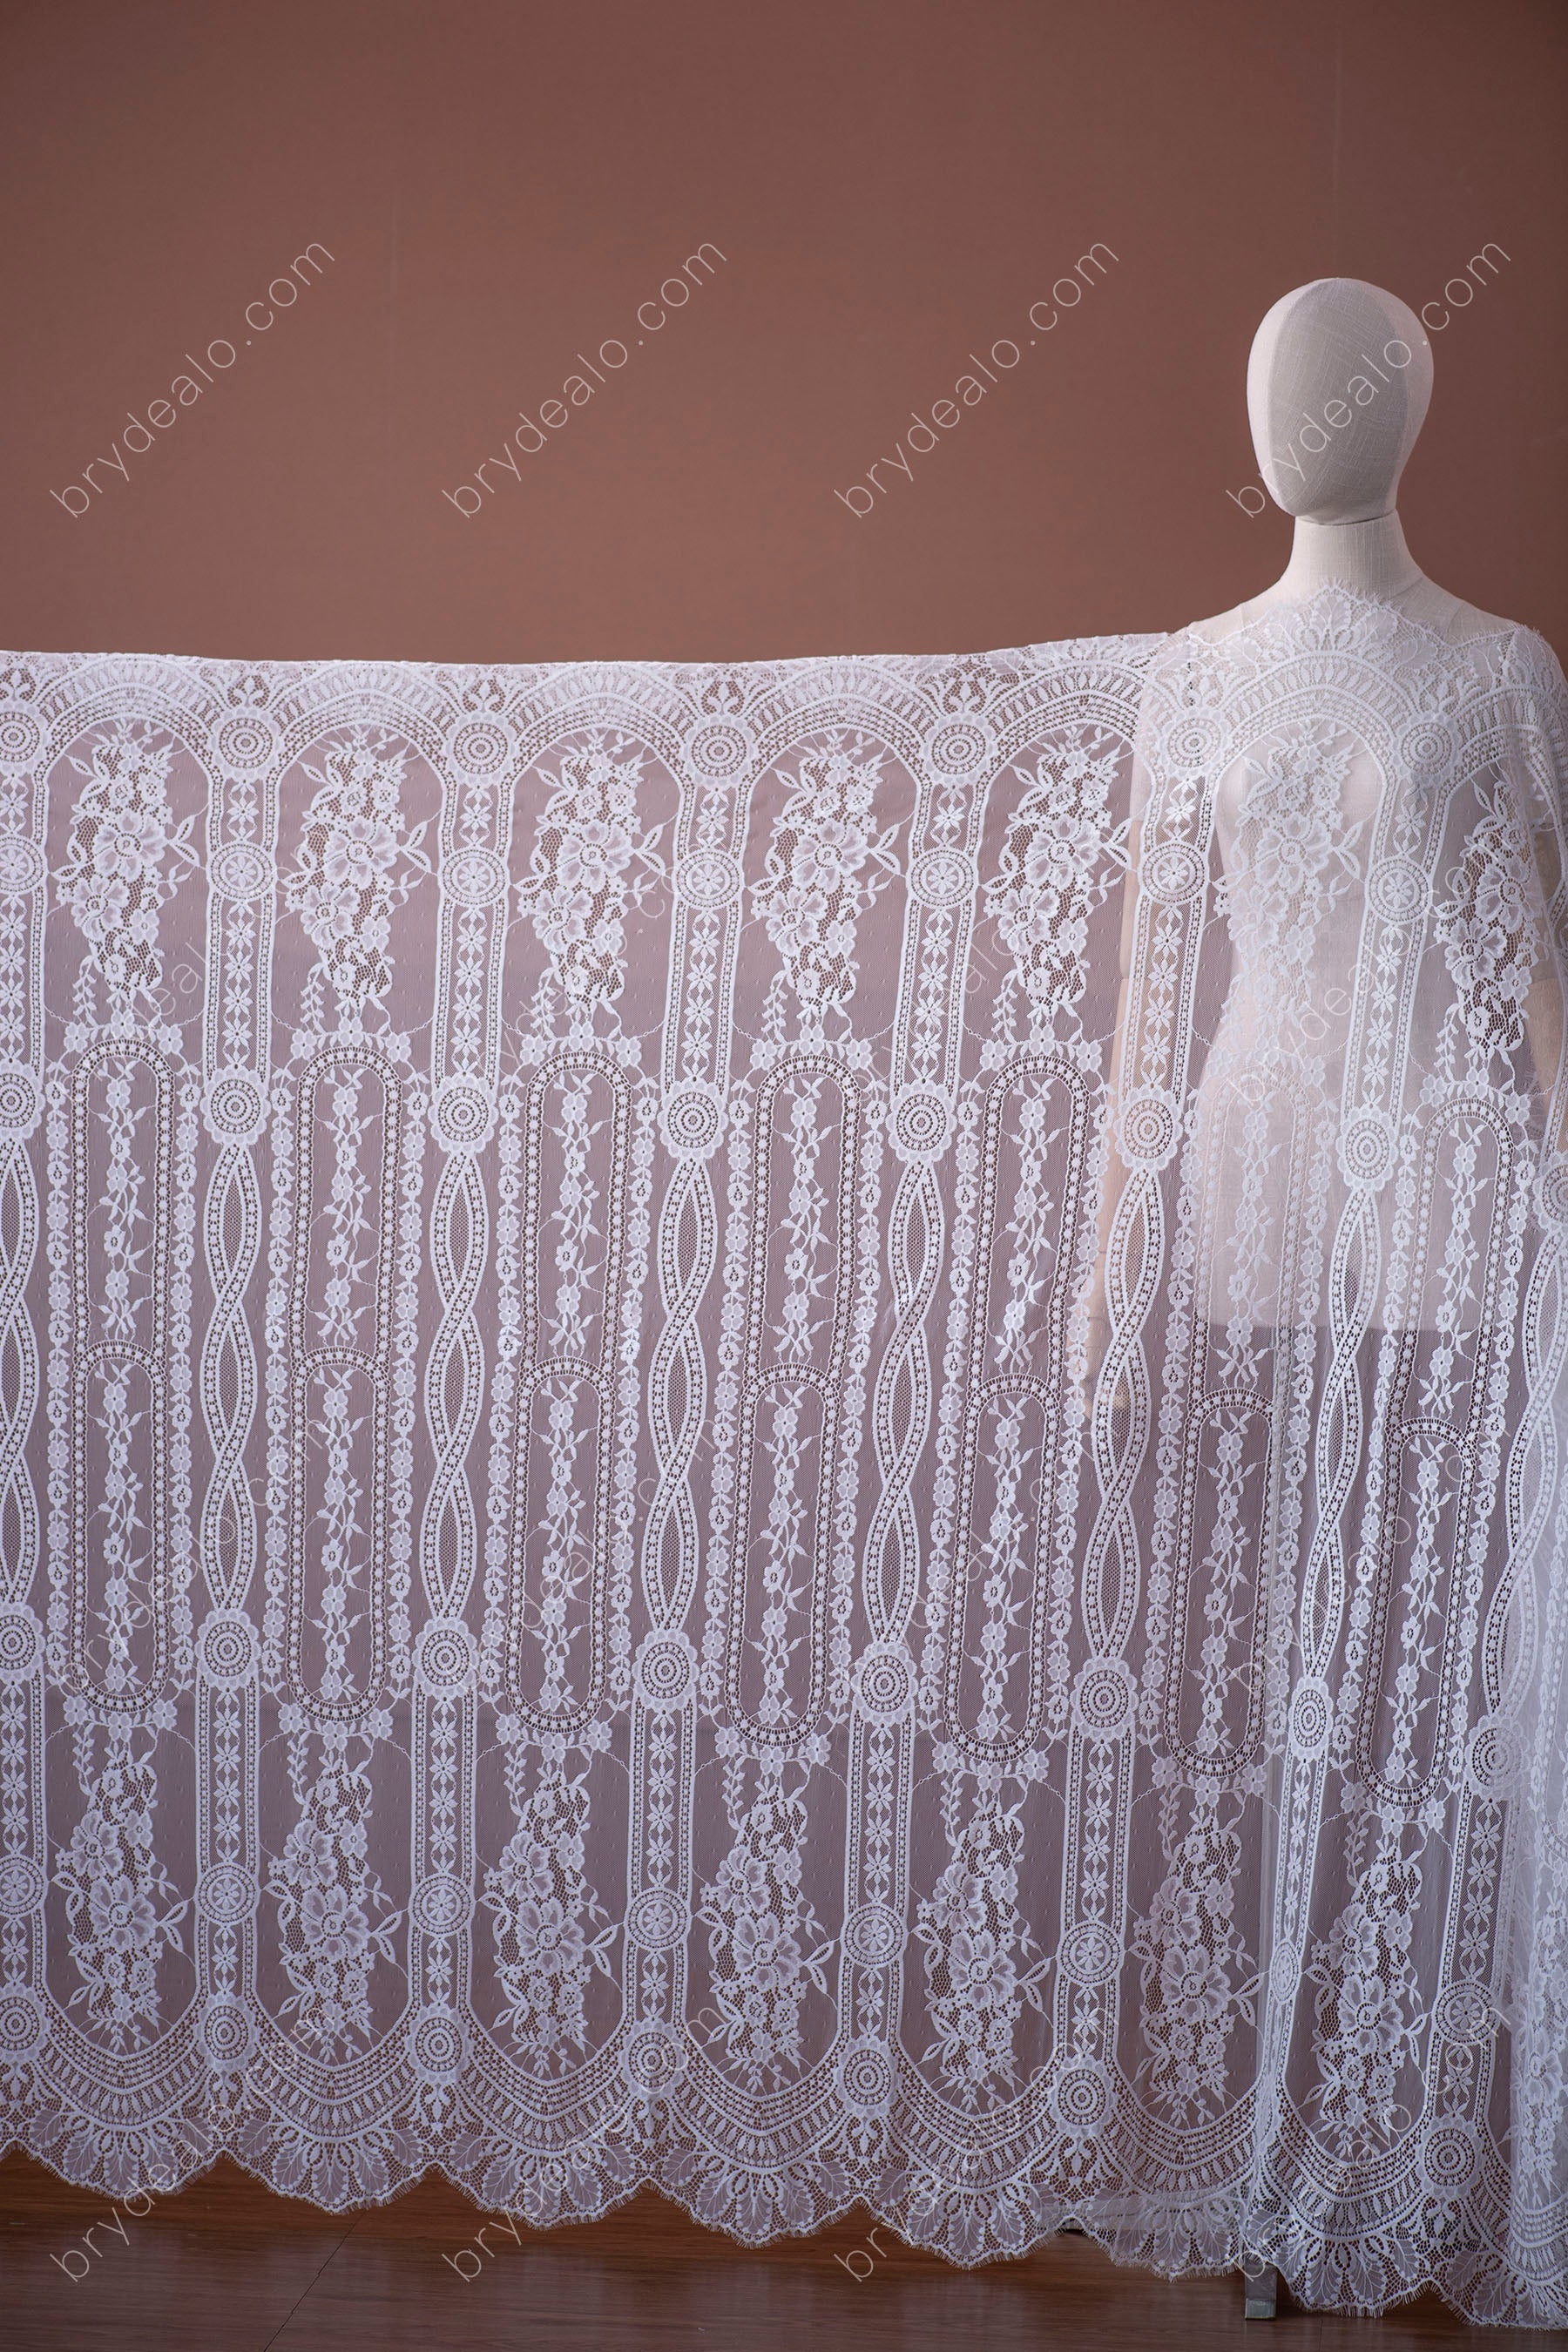 Unique Patterned Eyelash Lace Fabric for Dresses